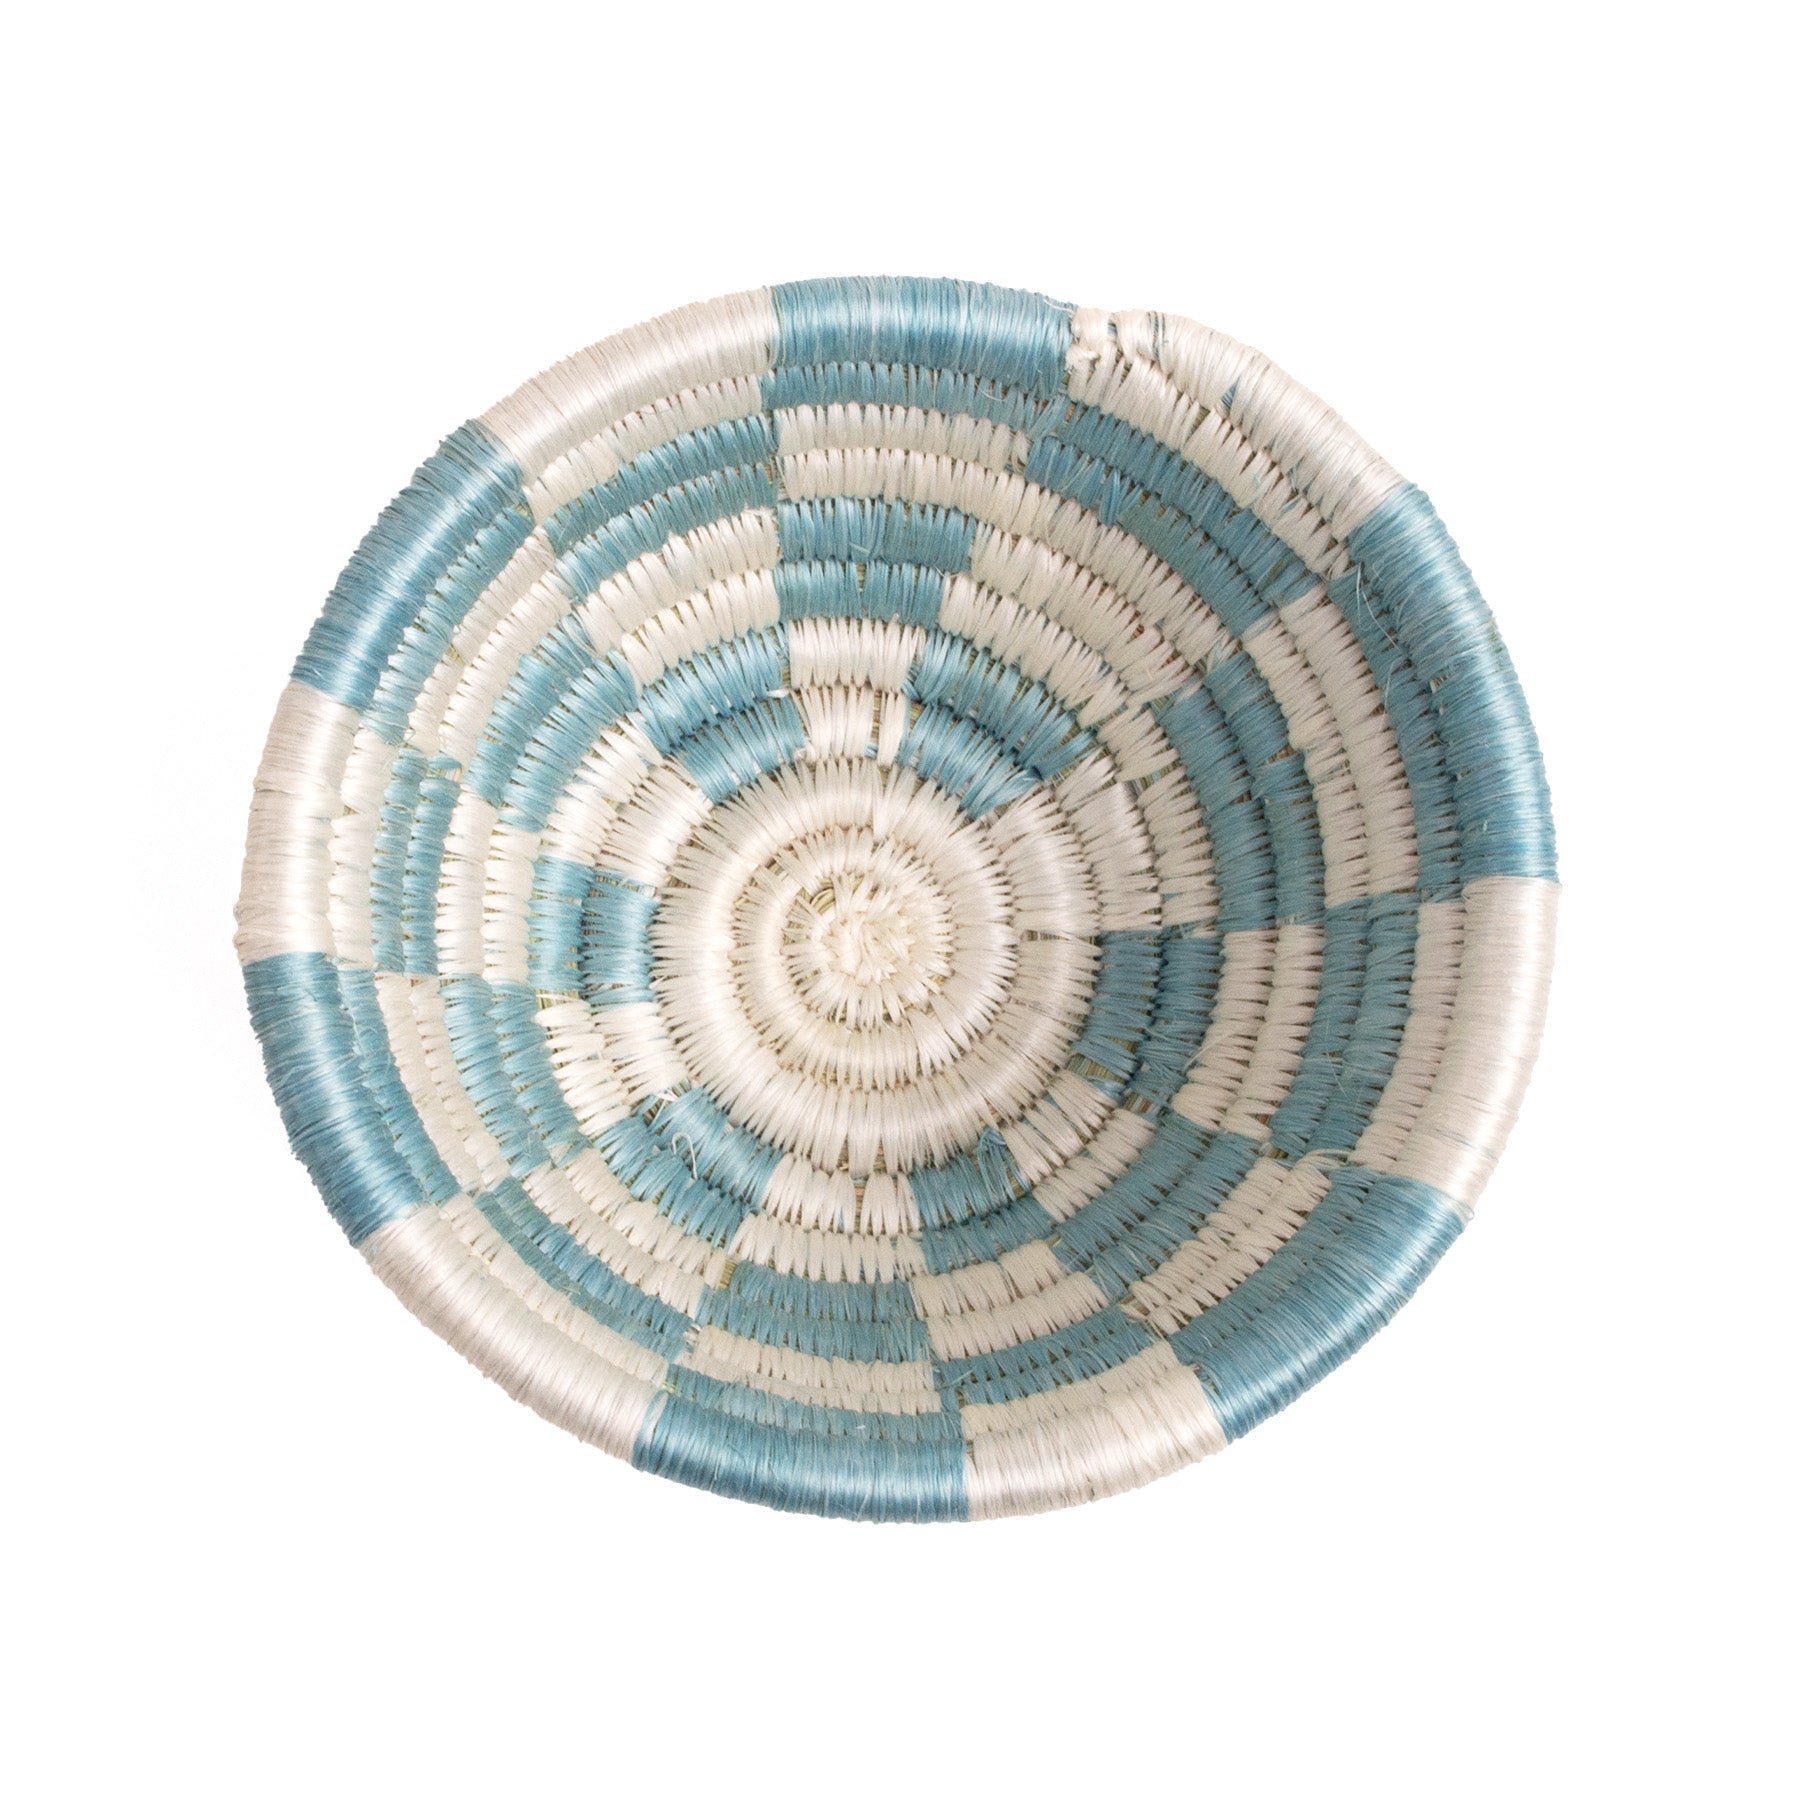 44340 - Blue Checkered Woven Bowl - $20